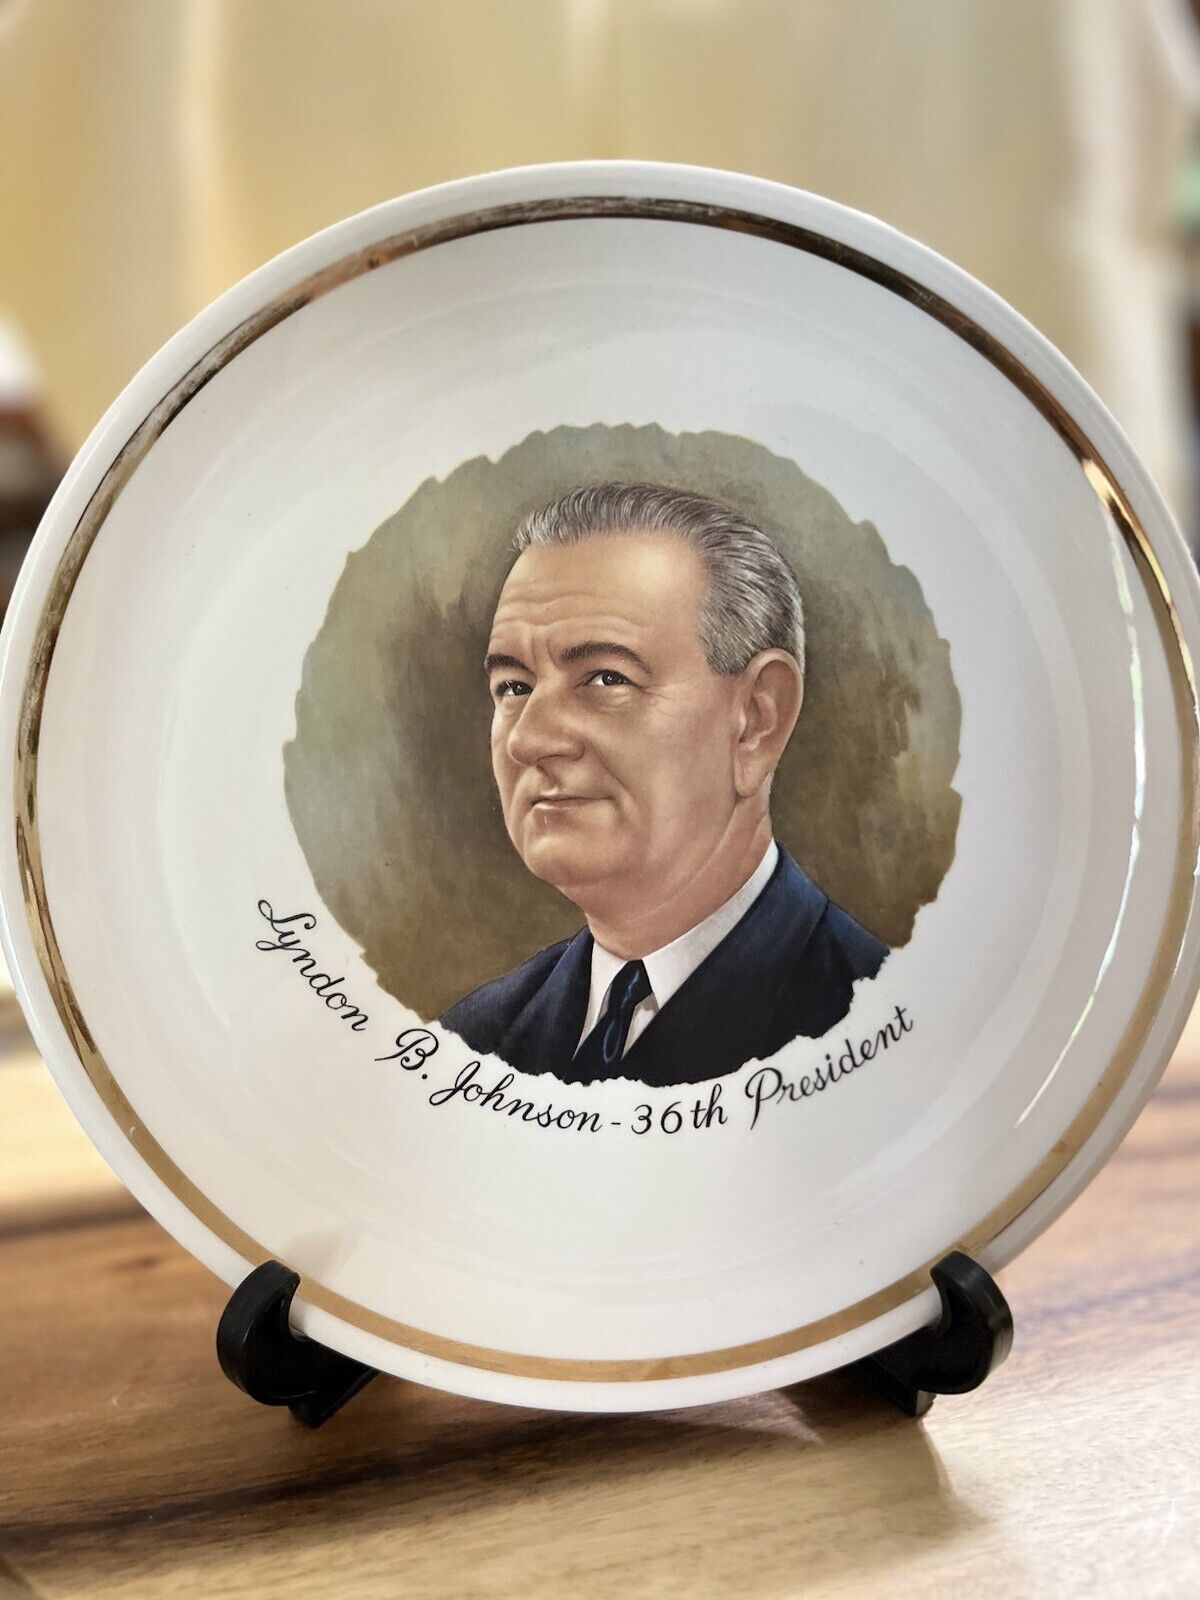 LYNDON B. JOHNSON - 36TH President -  Ceramic Commemorative Plate